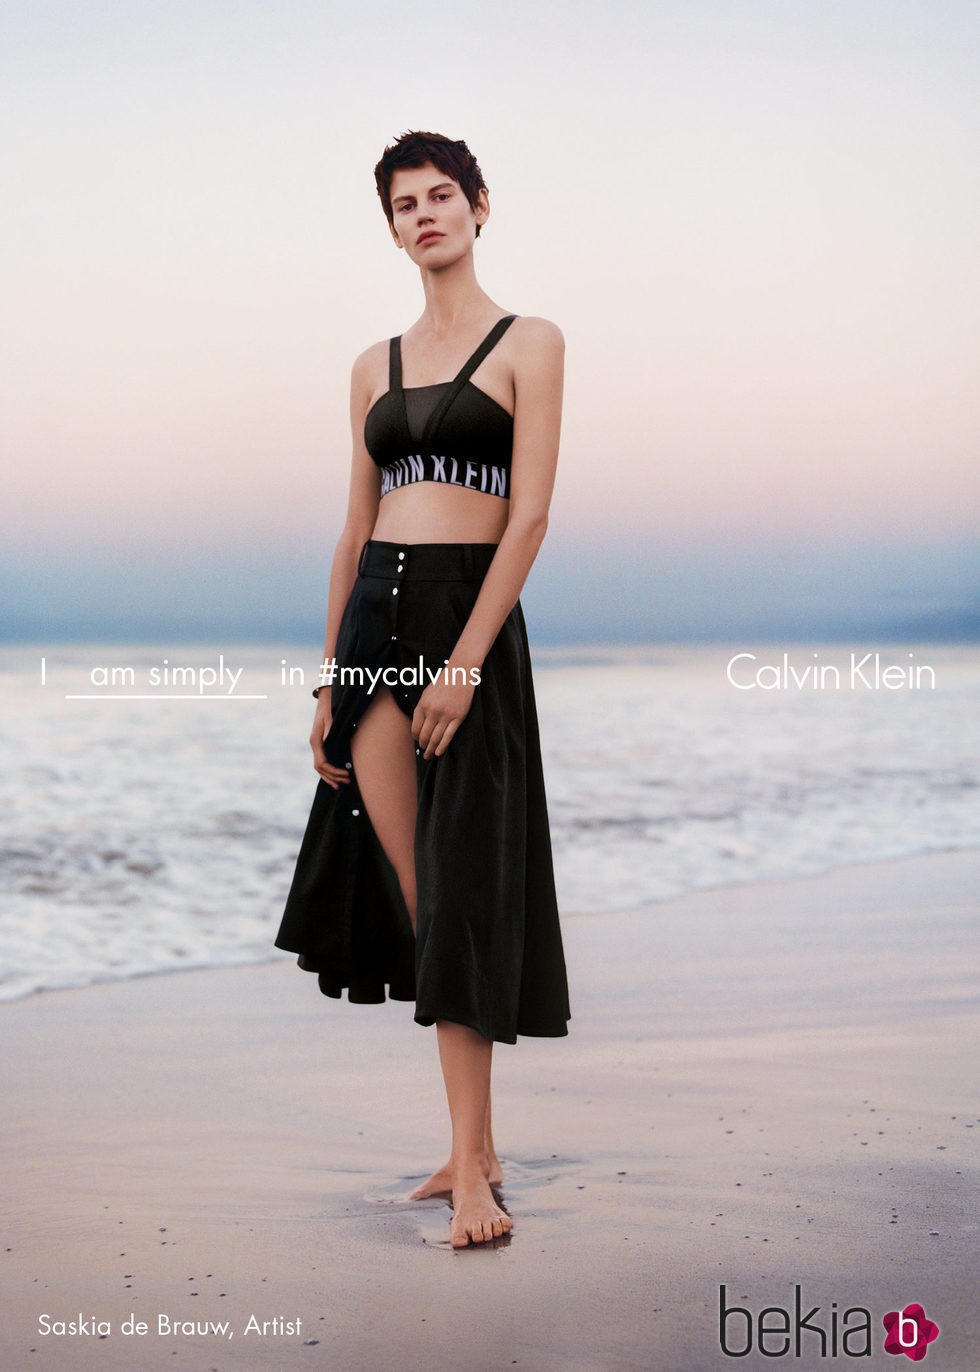 Saskia de Brauw con sujetador deportivo de tirantes cruzados de Calvin Klein para la colección primavera/verano 2016